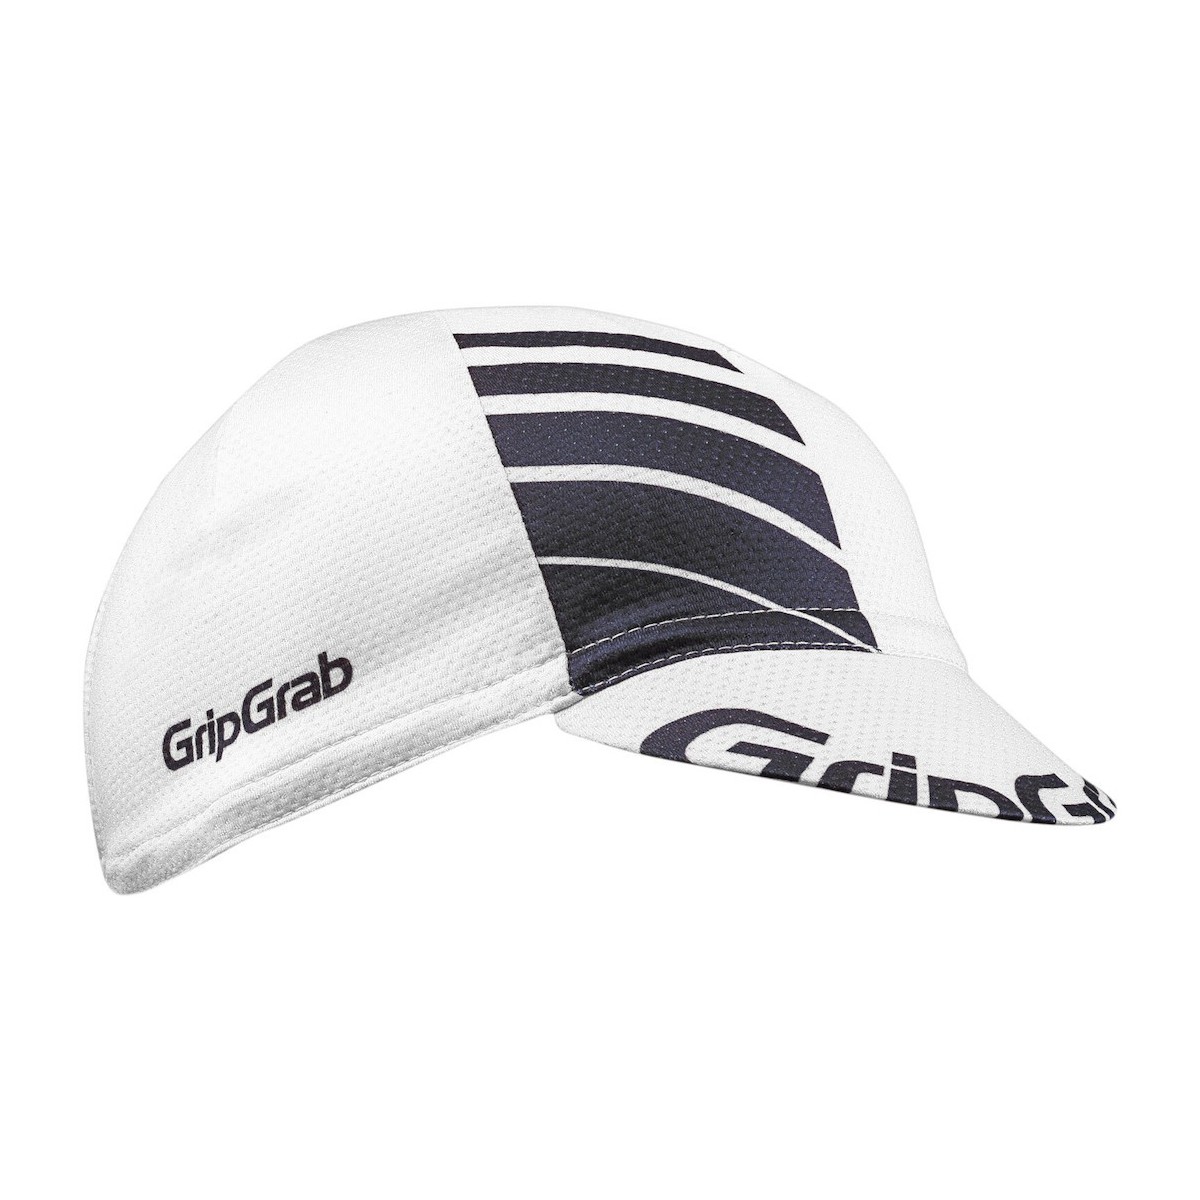 GRIPGRAB Lightweight Summer Cycling Cap - white/black